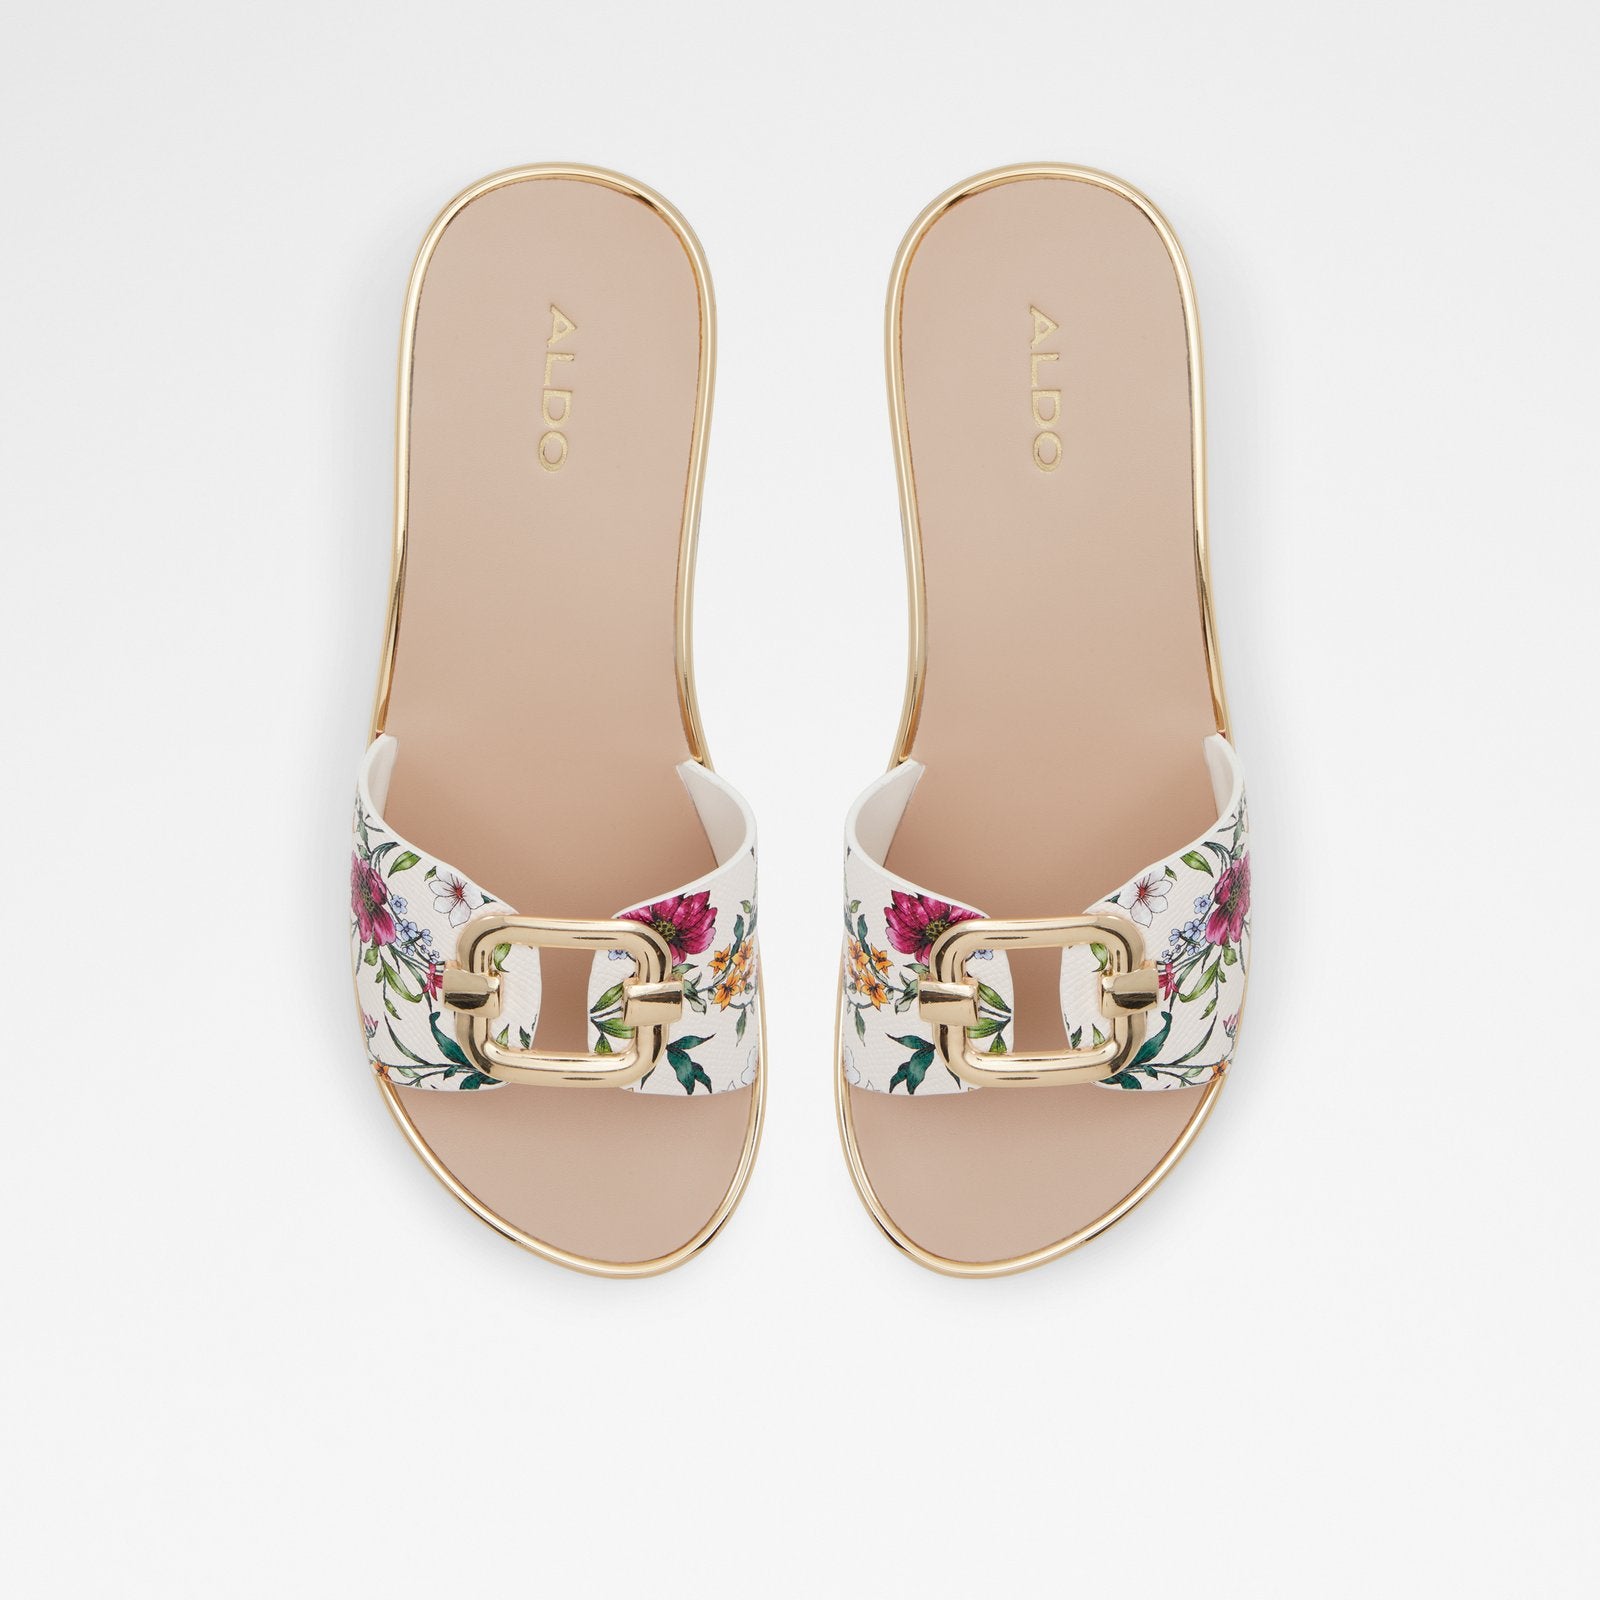 Onayllan / Beach Sandals Women Shoes - Pink - ALDO KSA